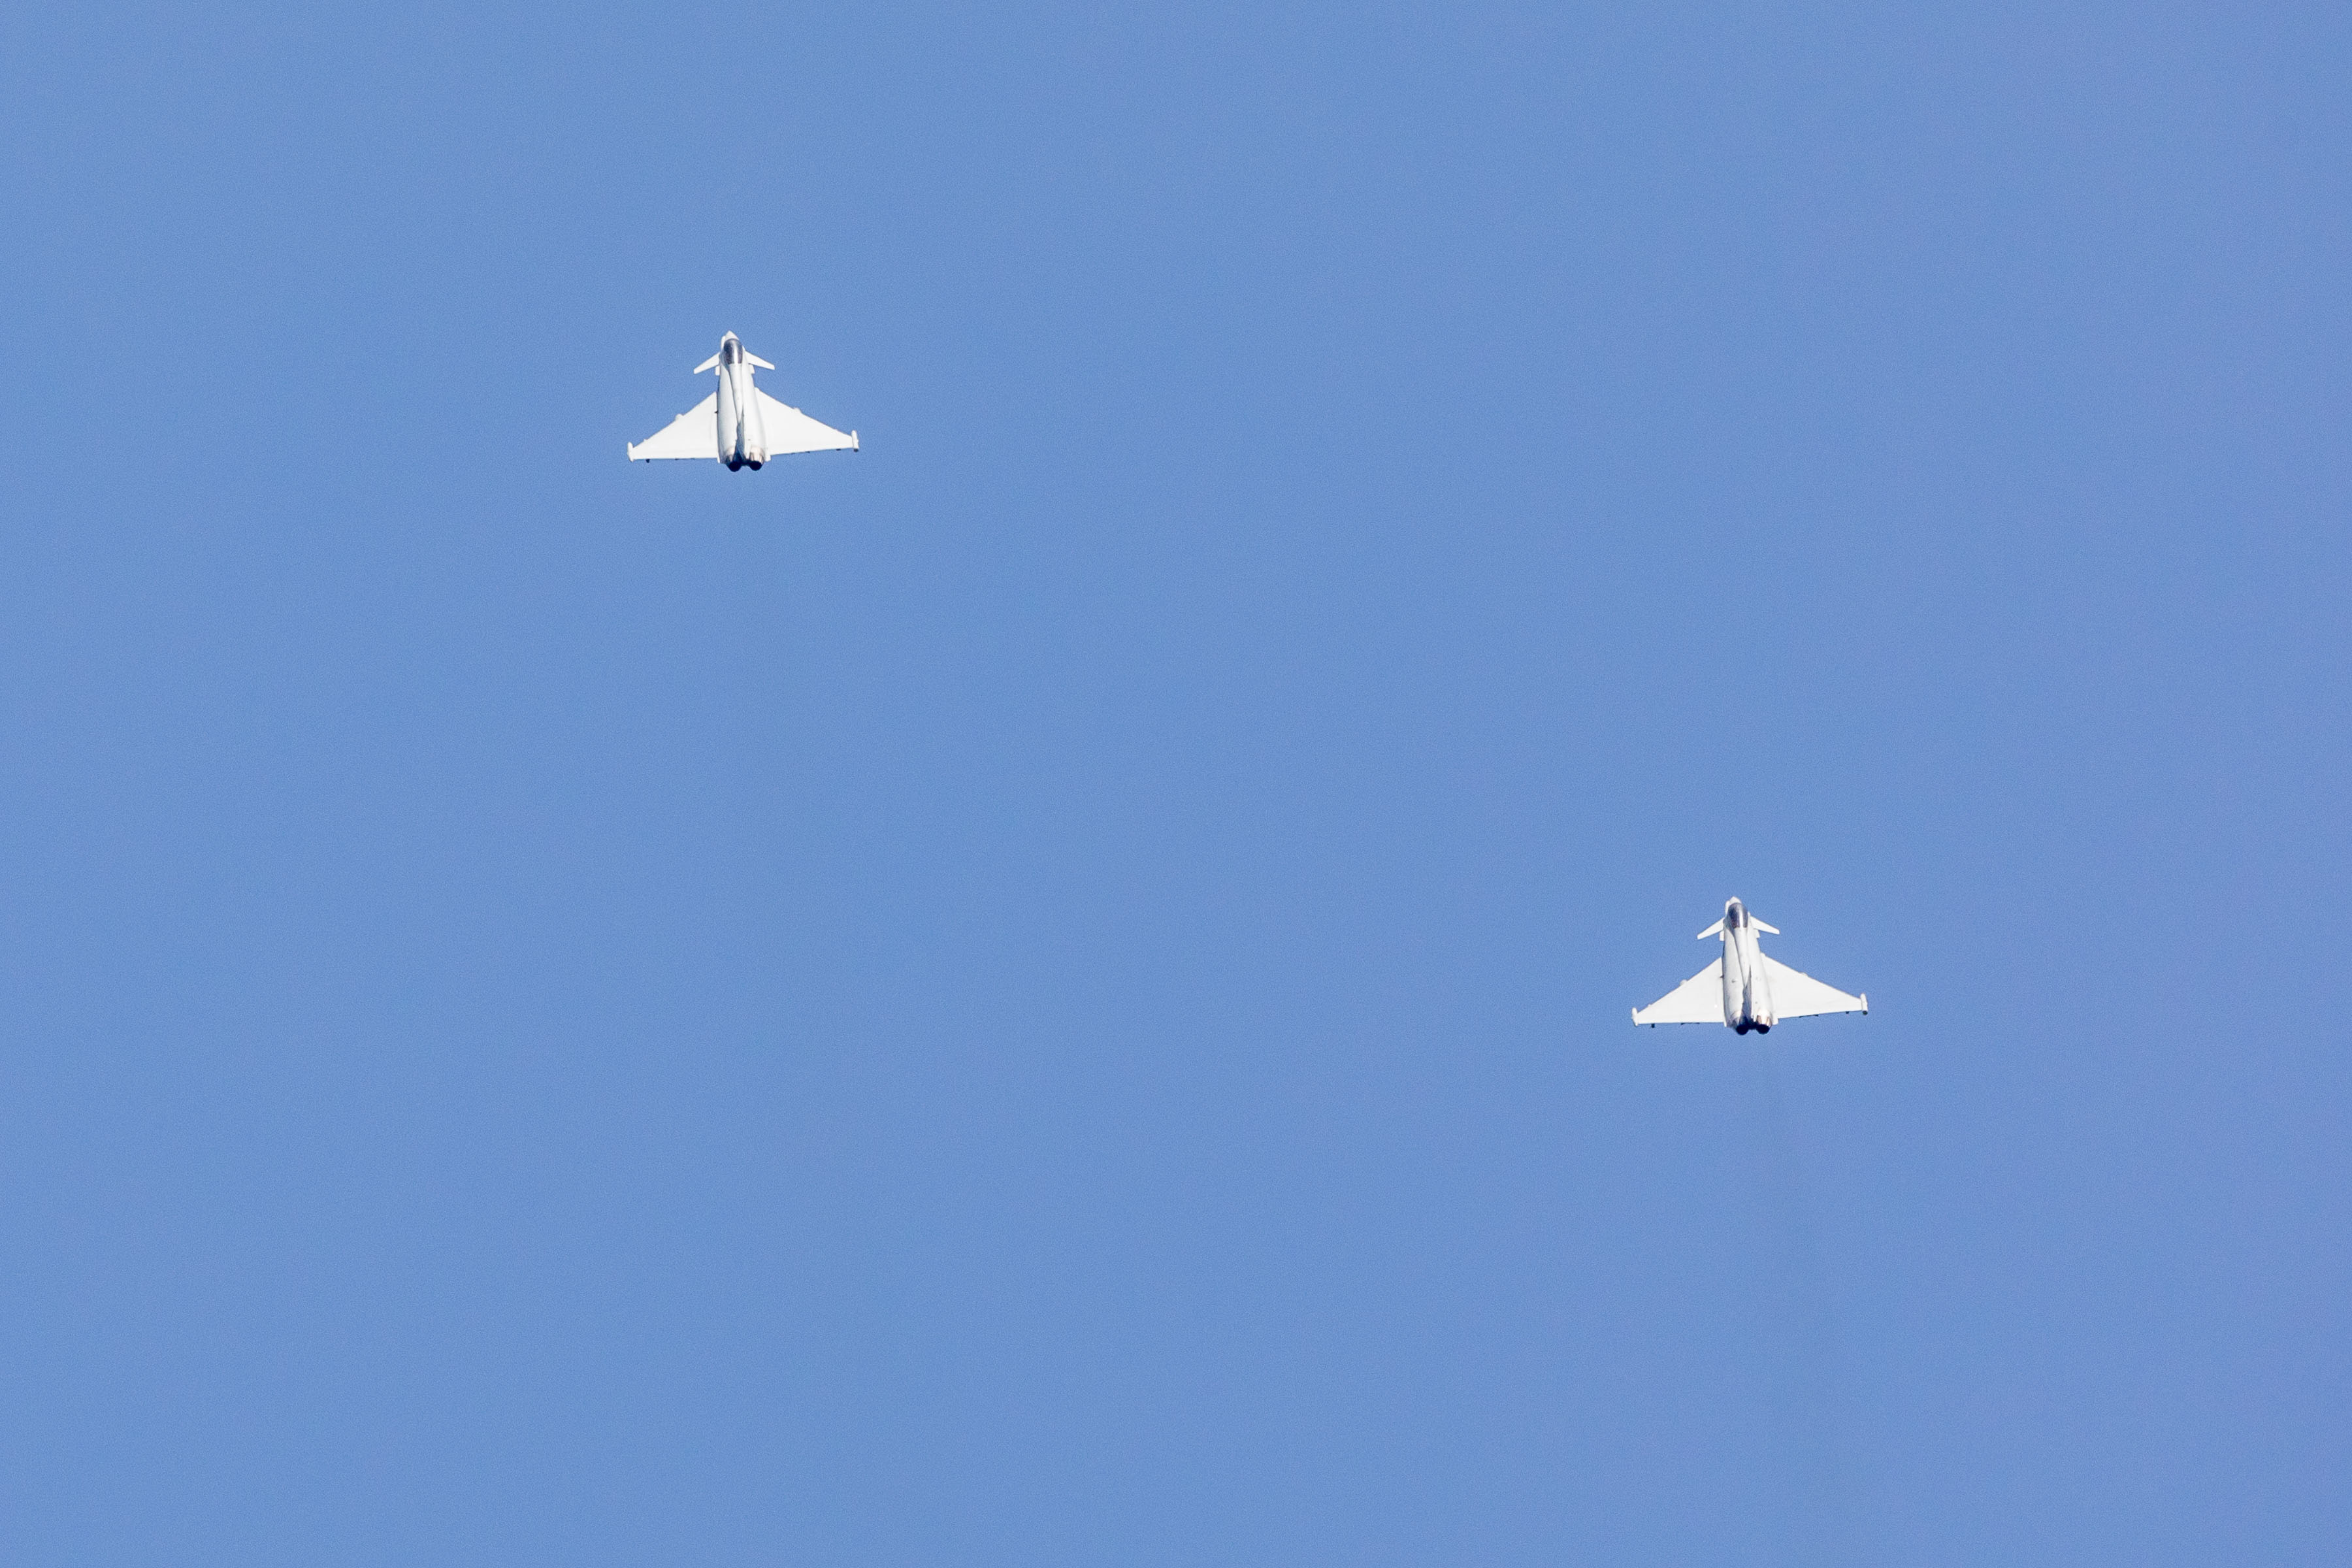 Two Typhoons in flight.